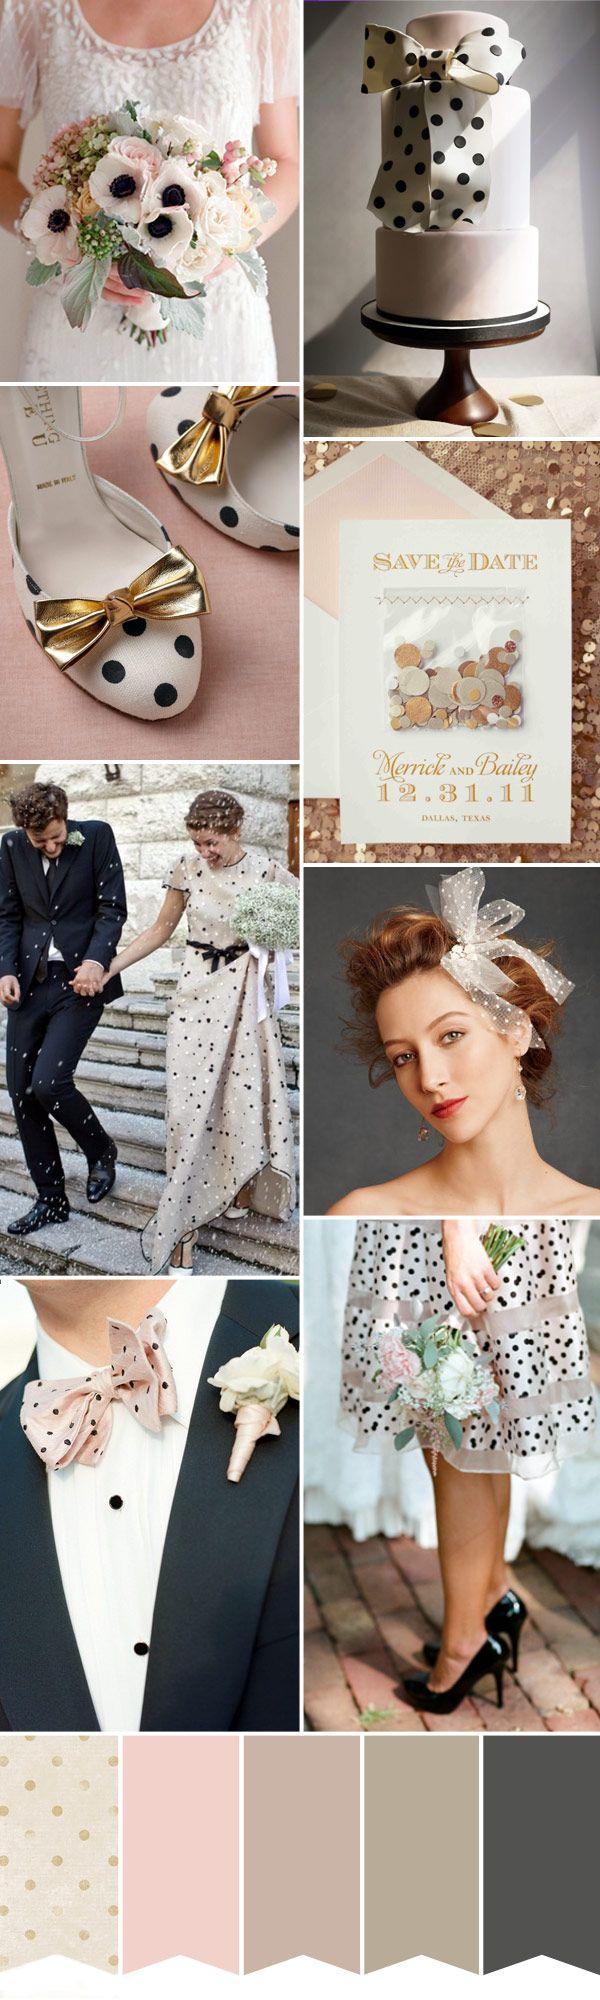 Hochzeit - Inspired By A Polka Dot Wedding - Blush, Gold And Grey Palette